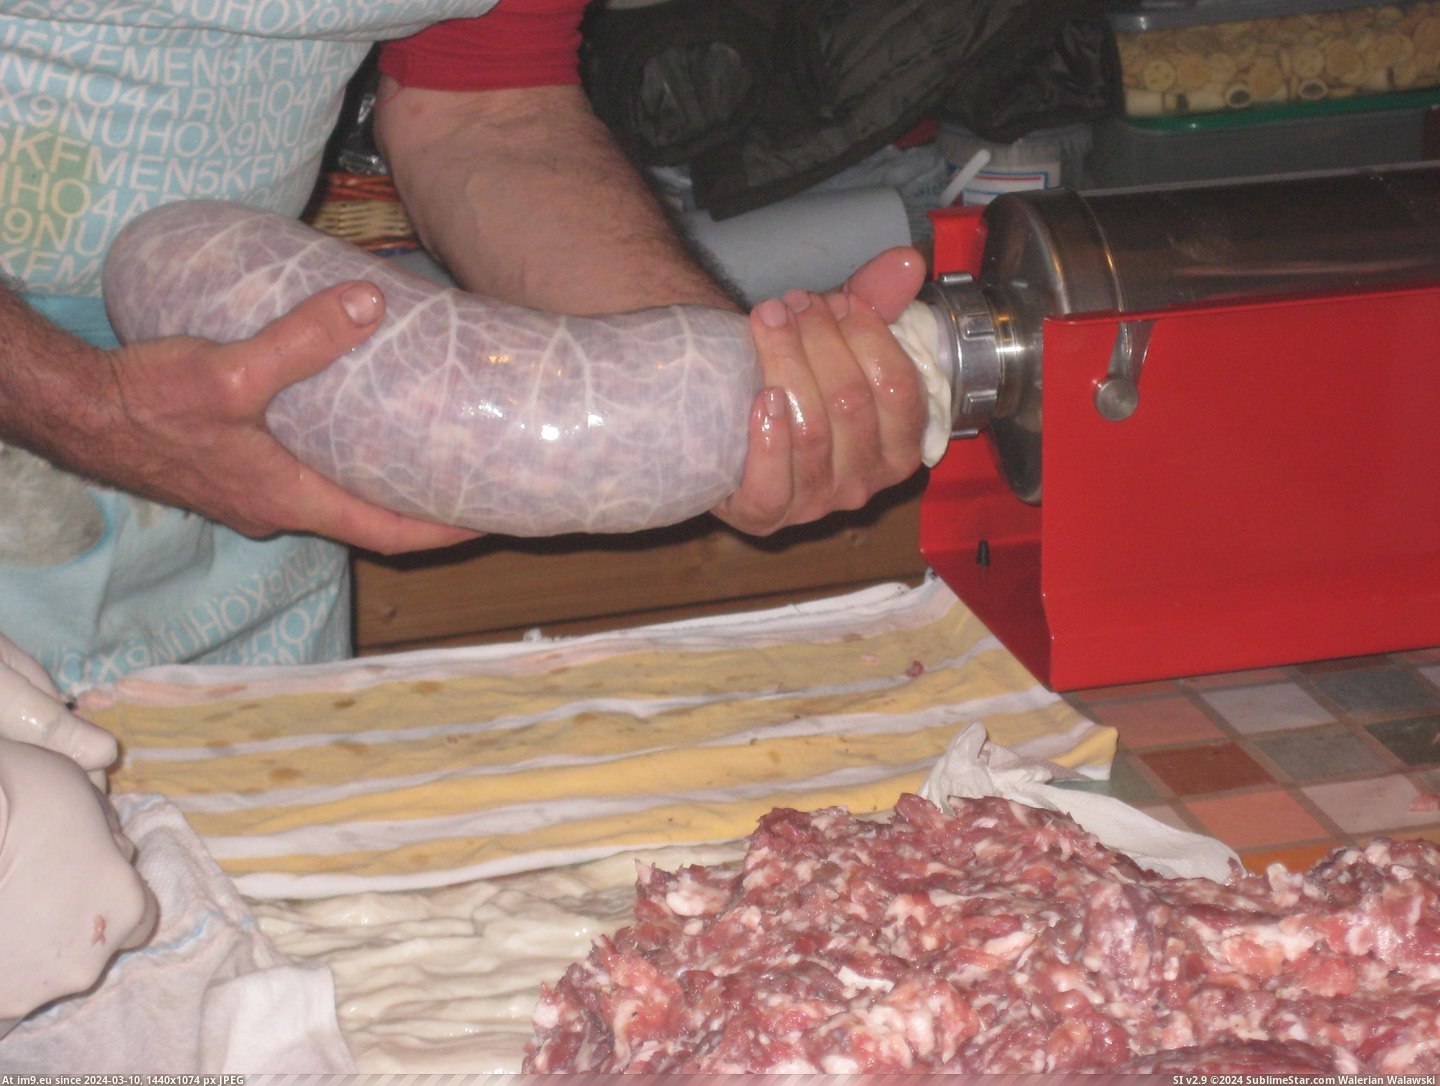 #Making #Homemade #Italy [Pics] Making homemade salami in Italy 2 Pic. (Bild von album My r/PICS favs))